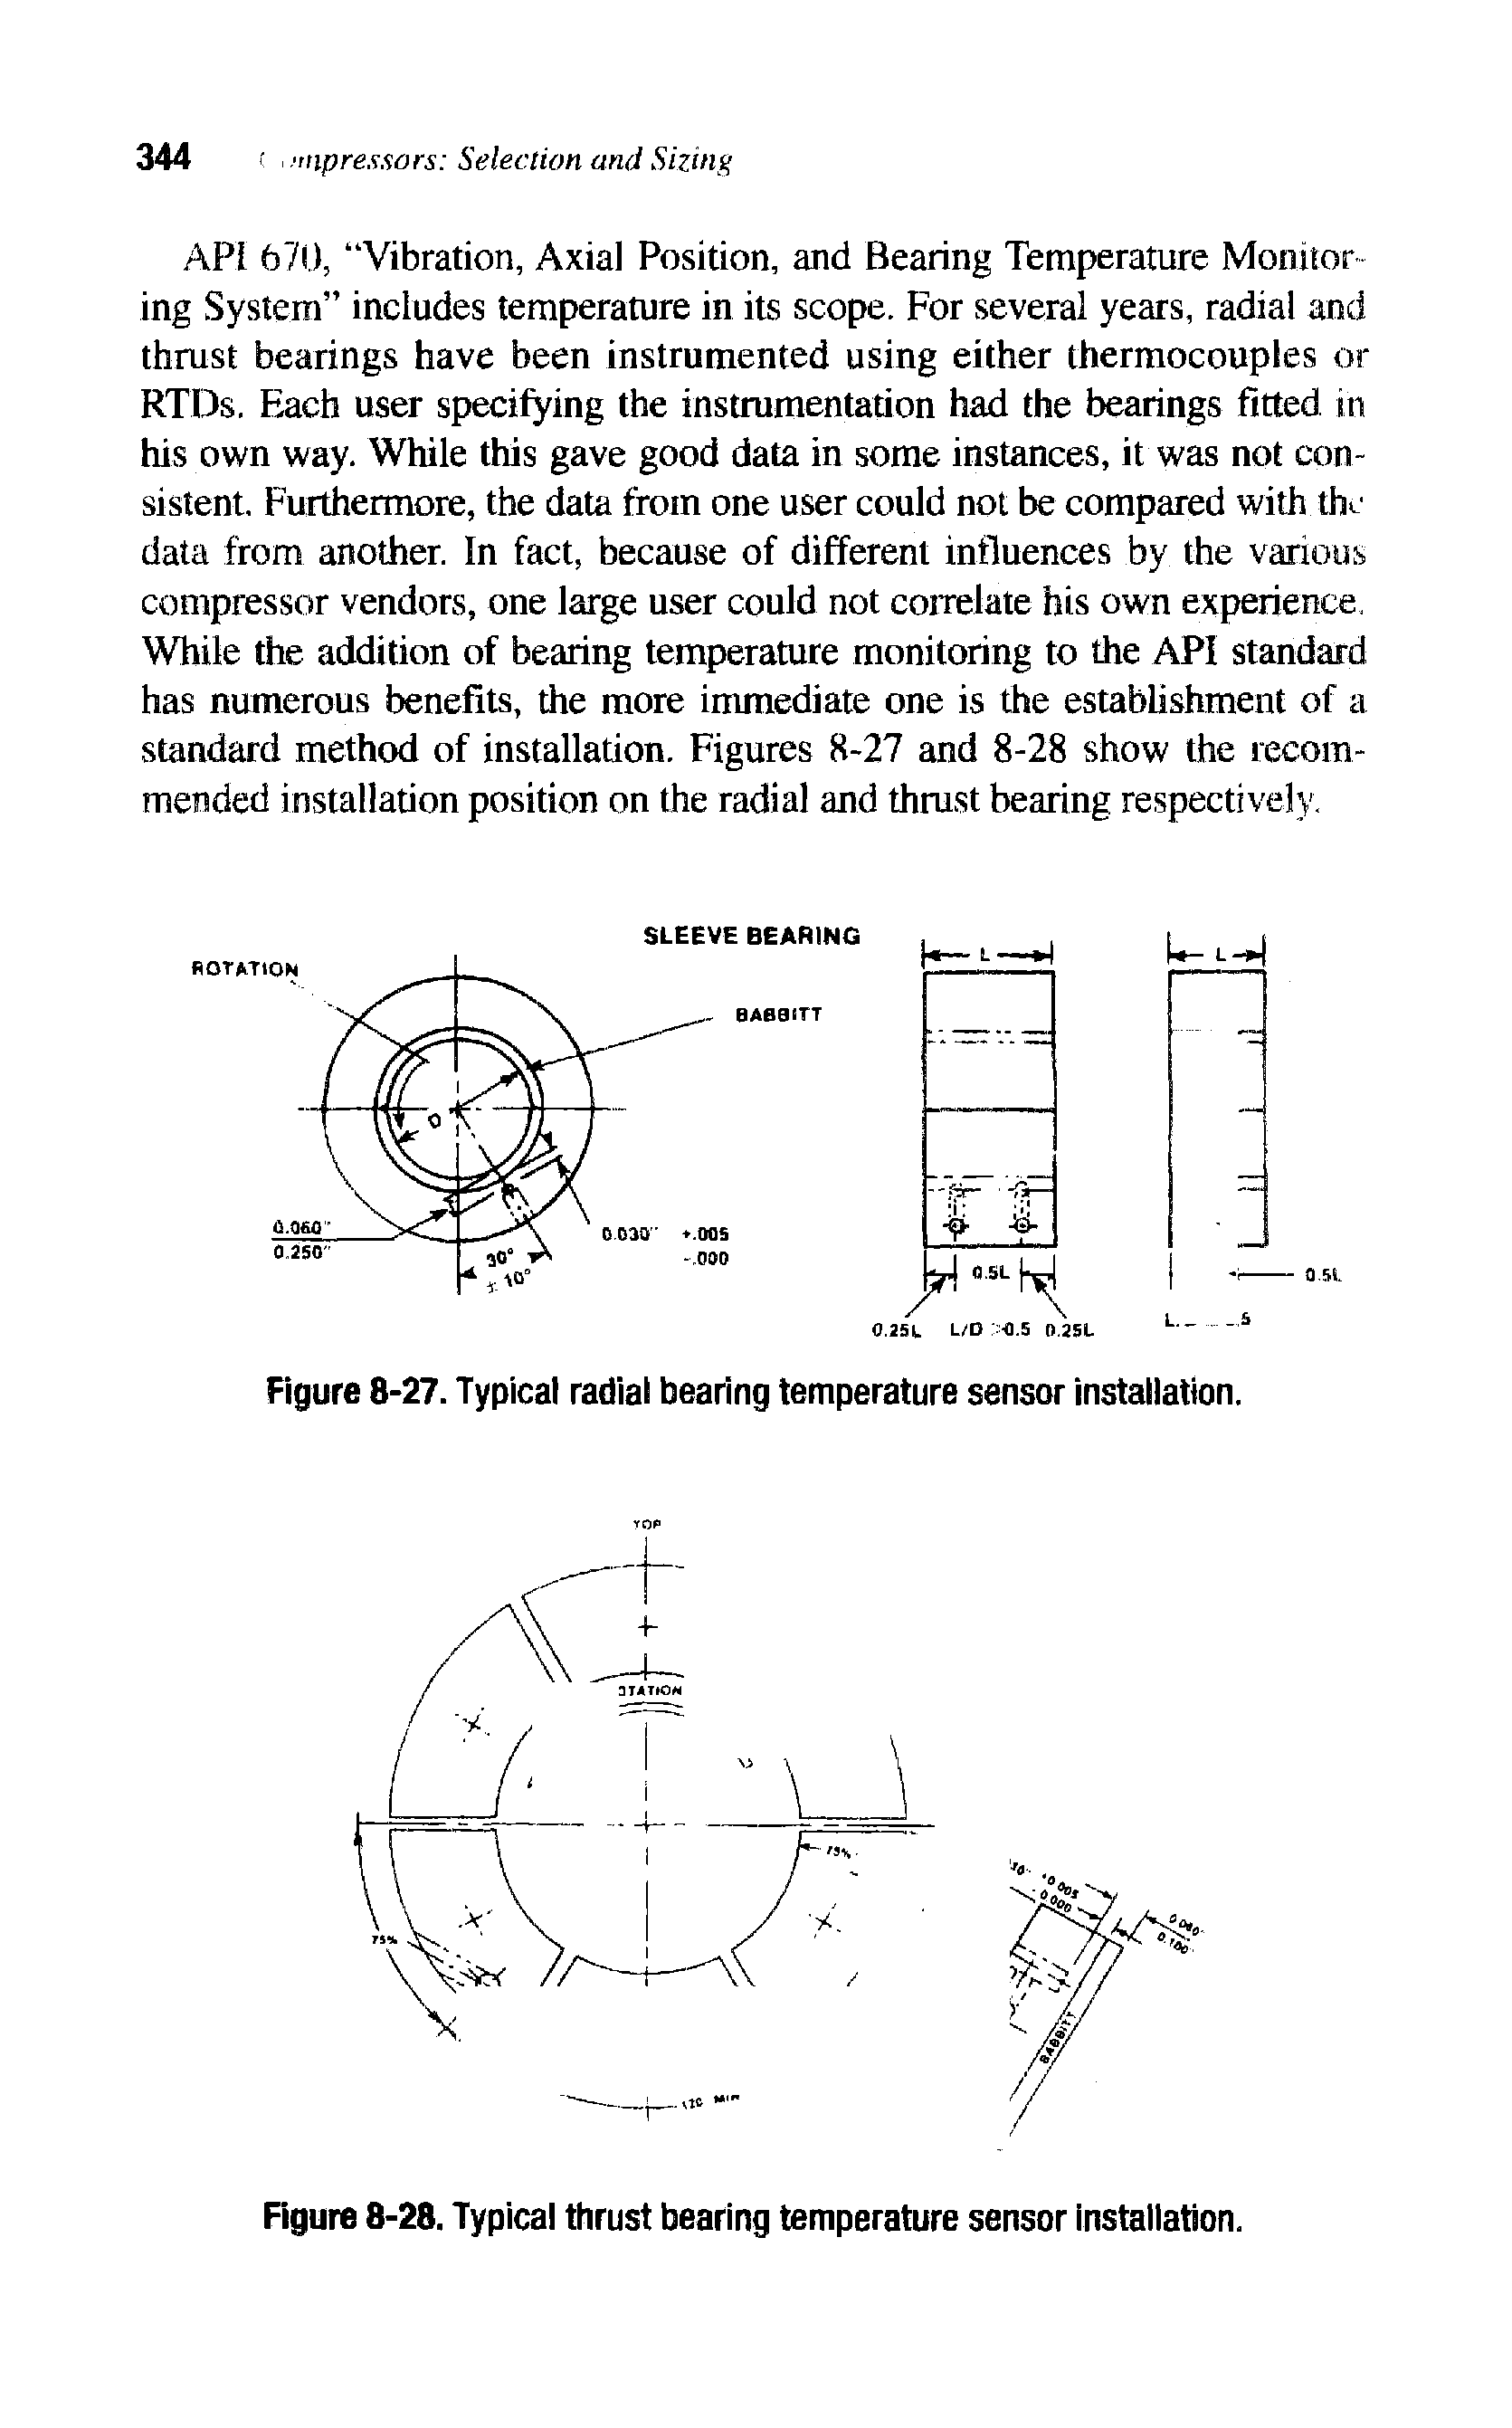 Figure 8-27. Typical radial bearing temperature sensor installation.